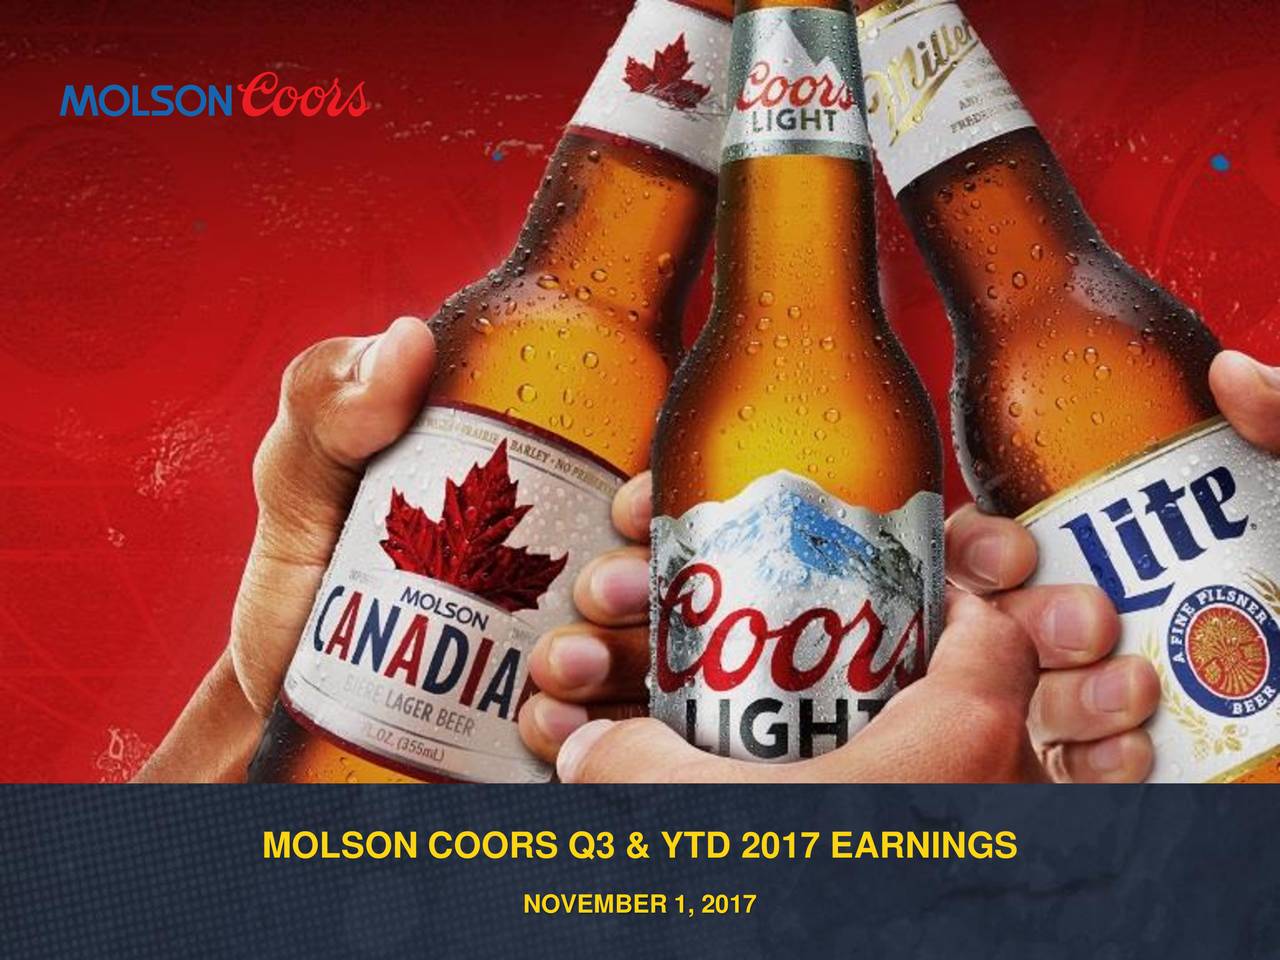 MOLSON COORS Q3 & YTD 2017 EARNINGS